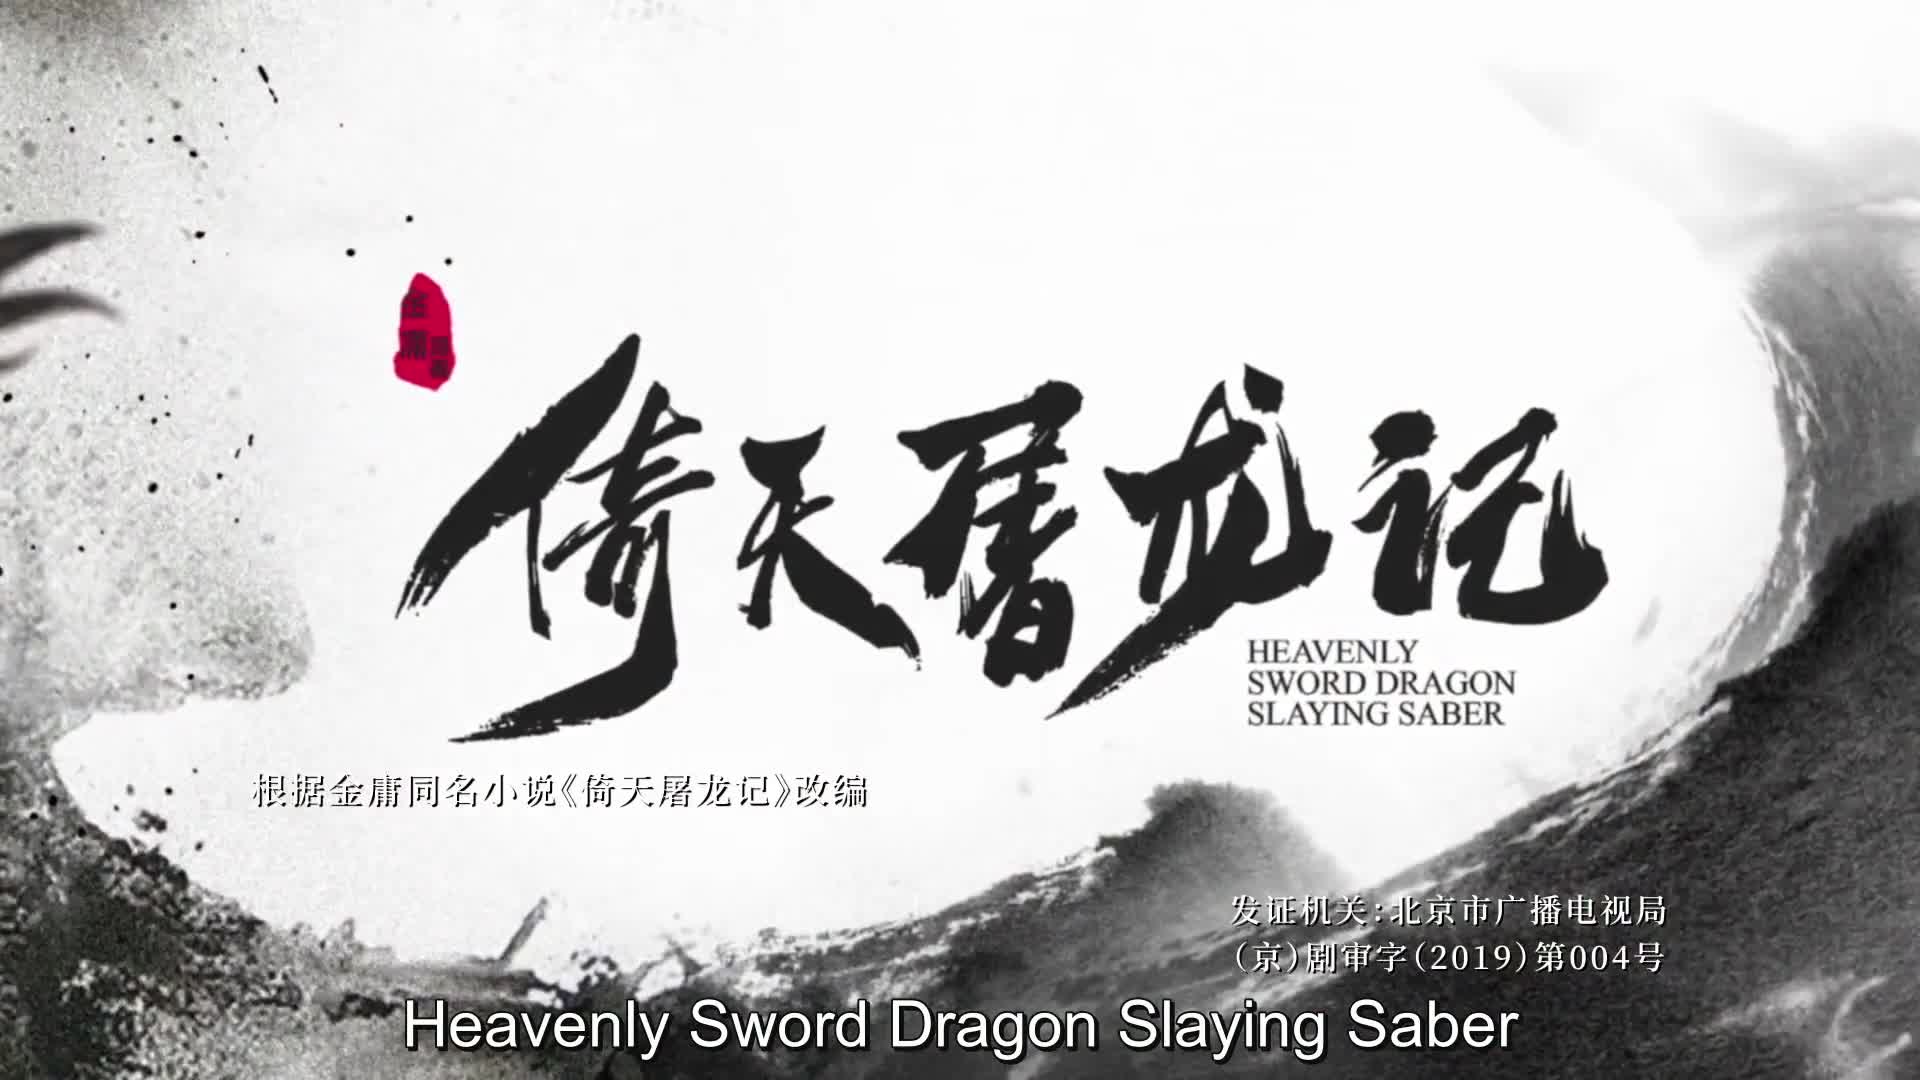 Heavenly Sword Dragon Slaying Saber